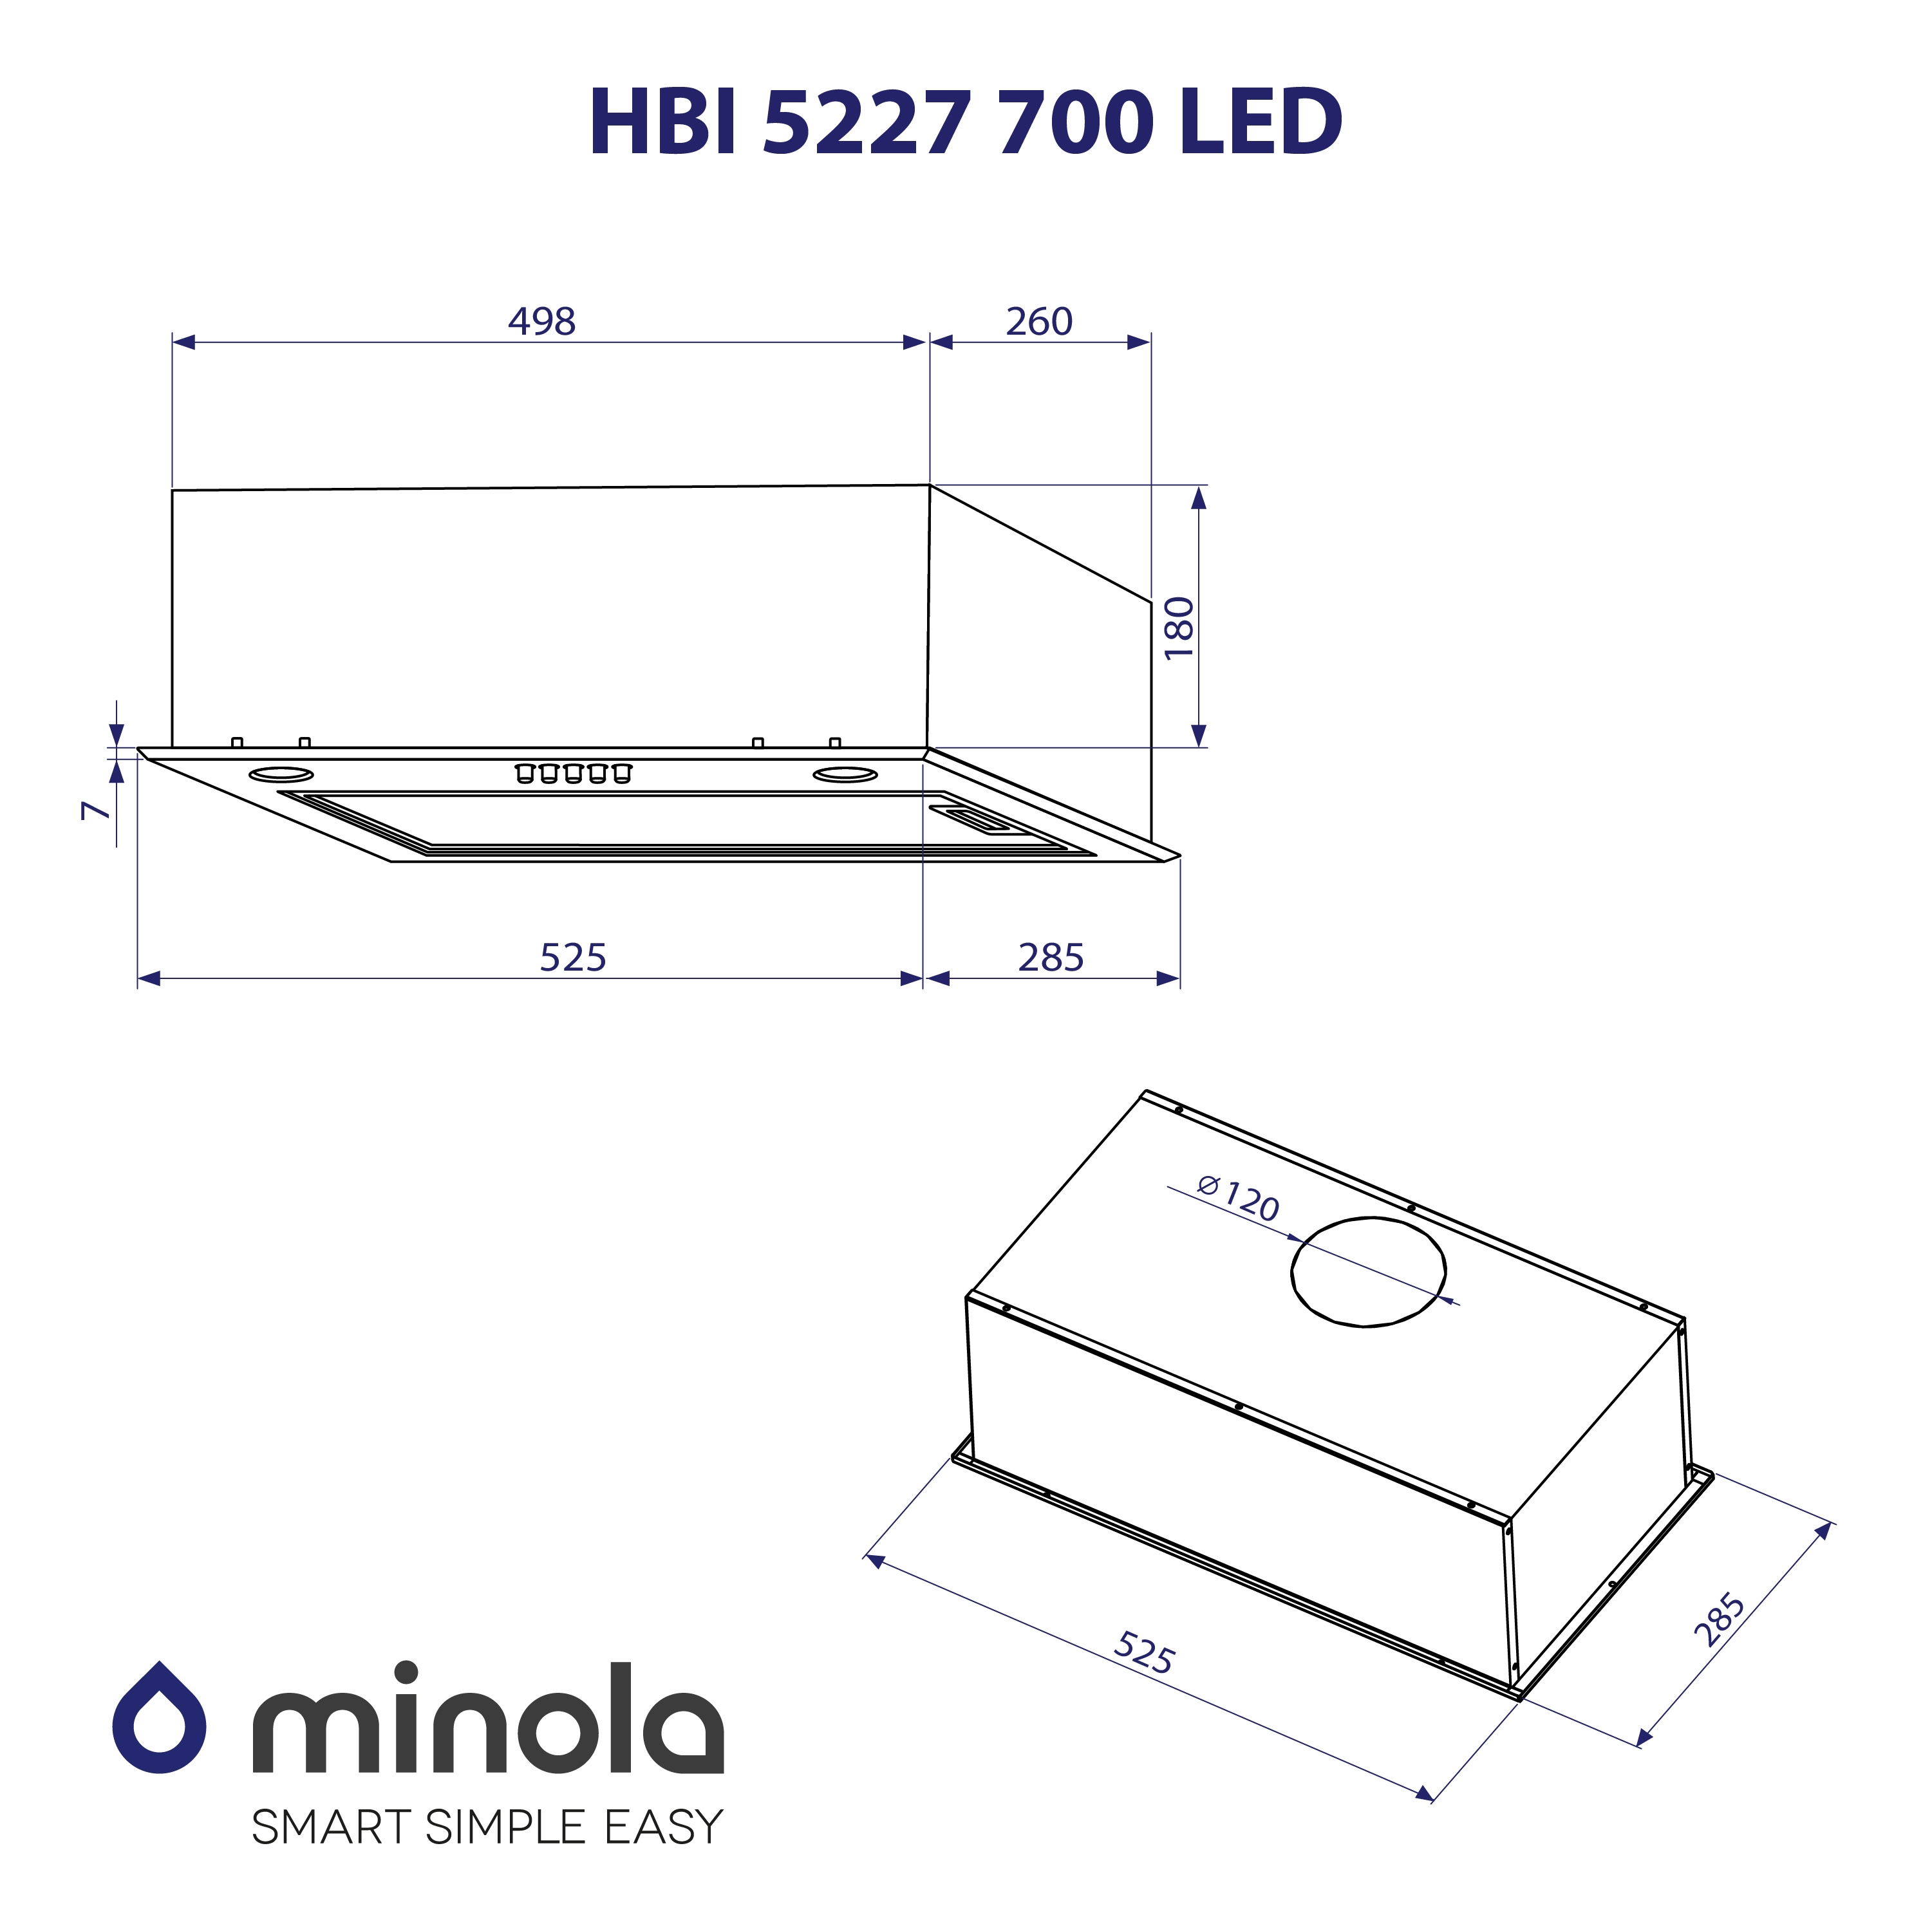 Minola HBI 5227 I 700 LED Габаритные размеры